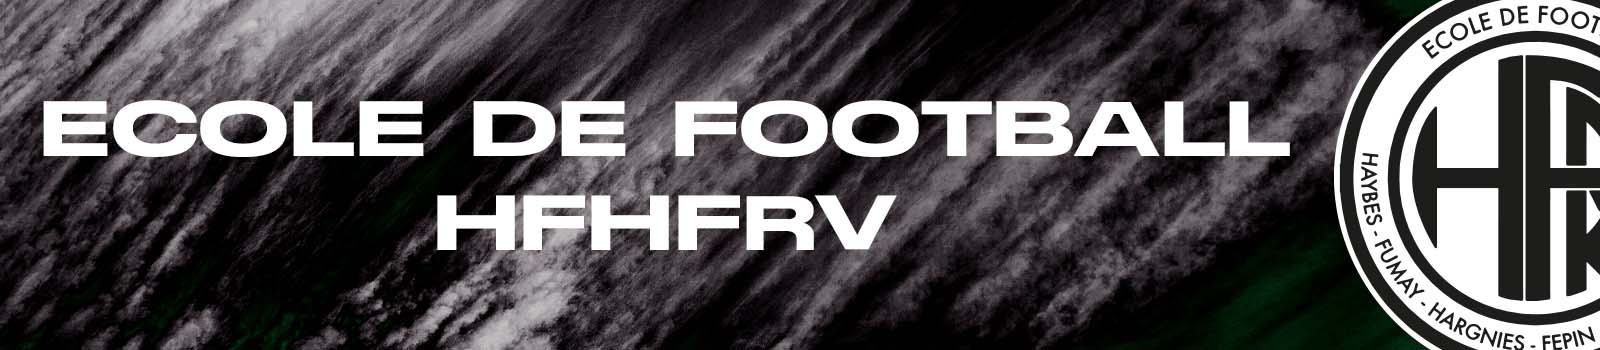 Ecole de Football HFHFRV